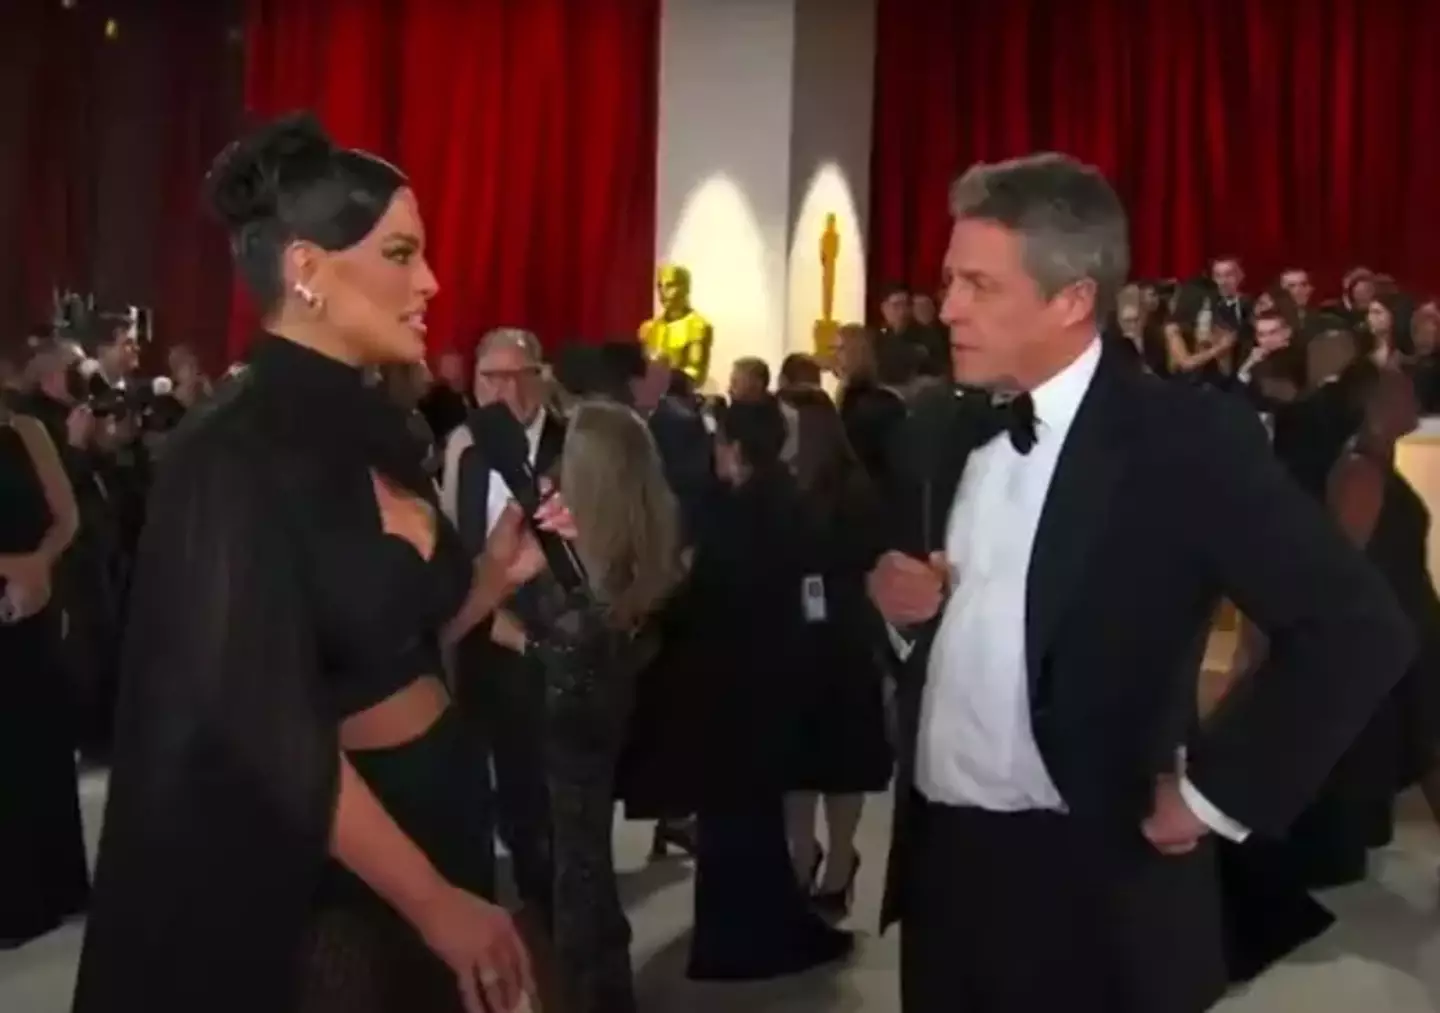 Ashley Graham and Hugh Grant had one of the most awkward interviews at last week's Oscars.